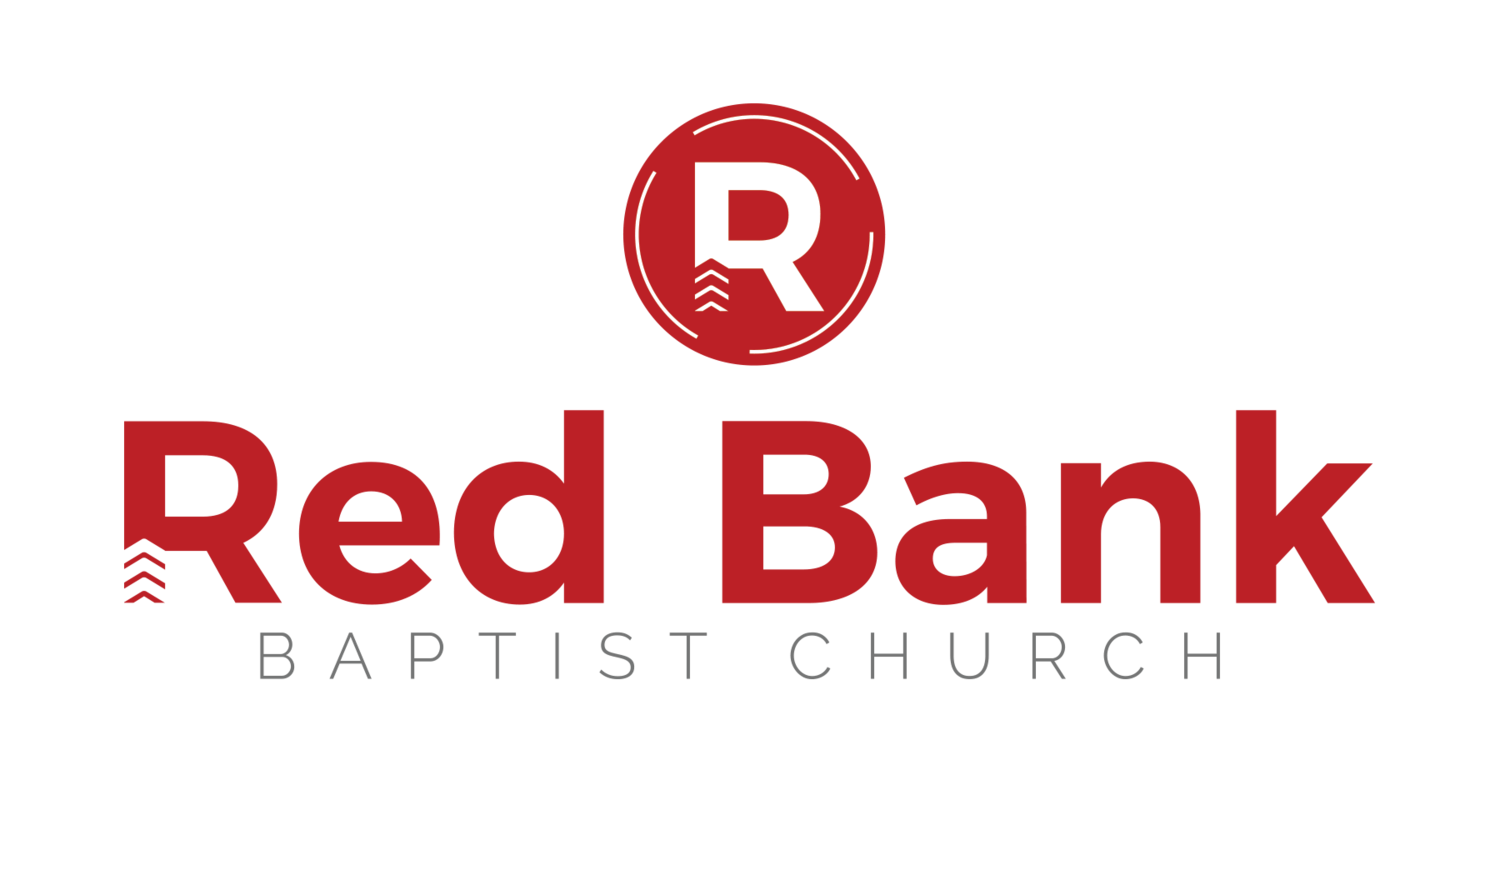 Red and Grey Church Logo - Red Bank Baptist Church